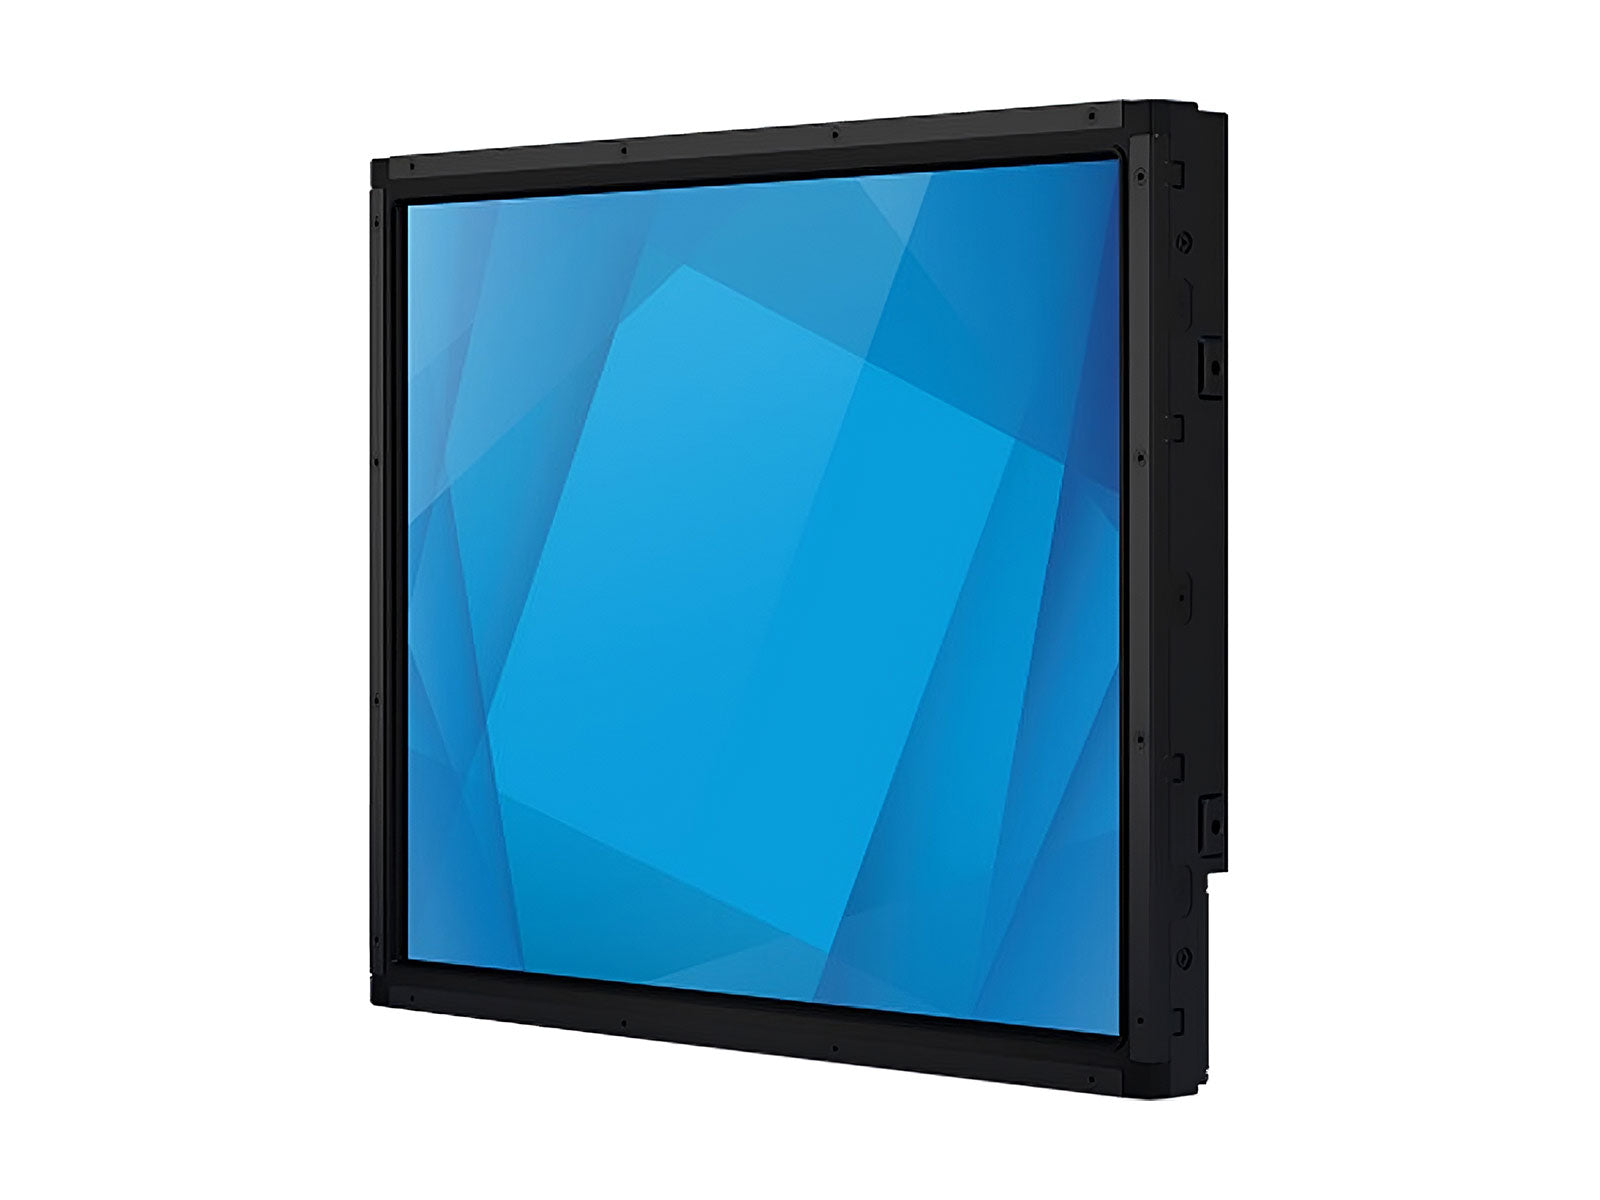 Elo 1790L 17" 1280 x 1024 Open Frame Touchscreen Display (ET1790L)